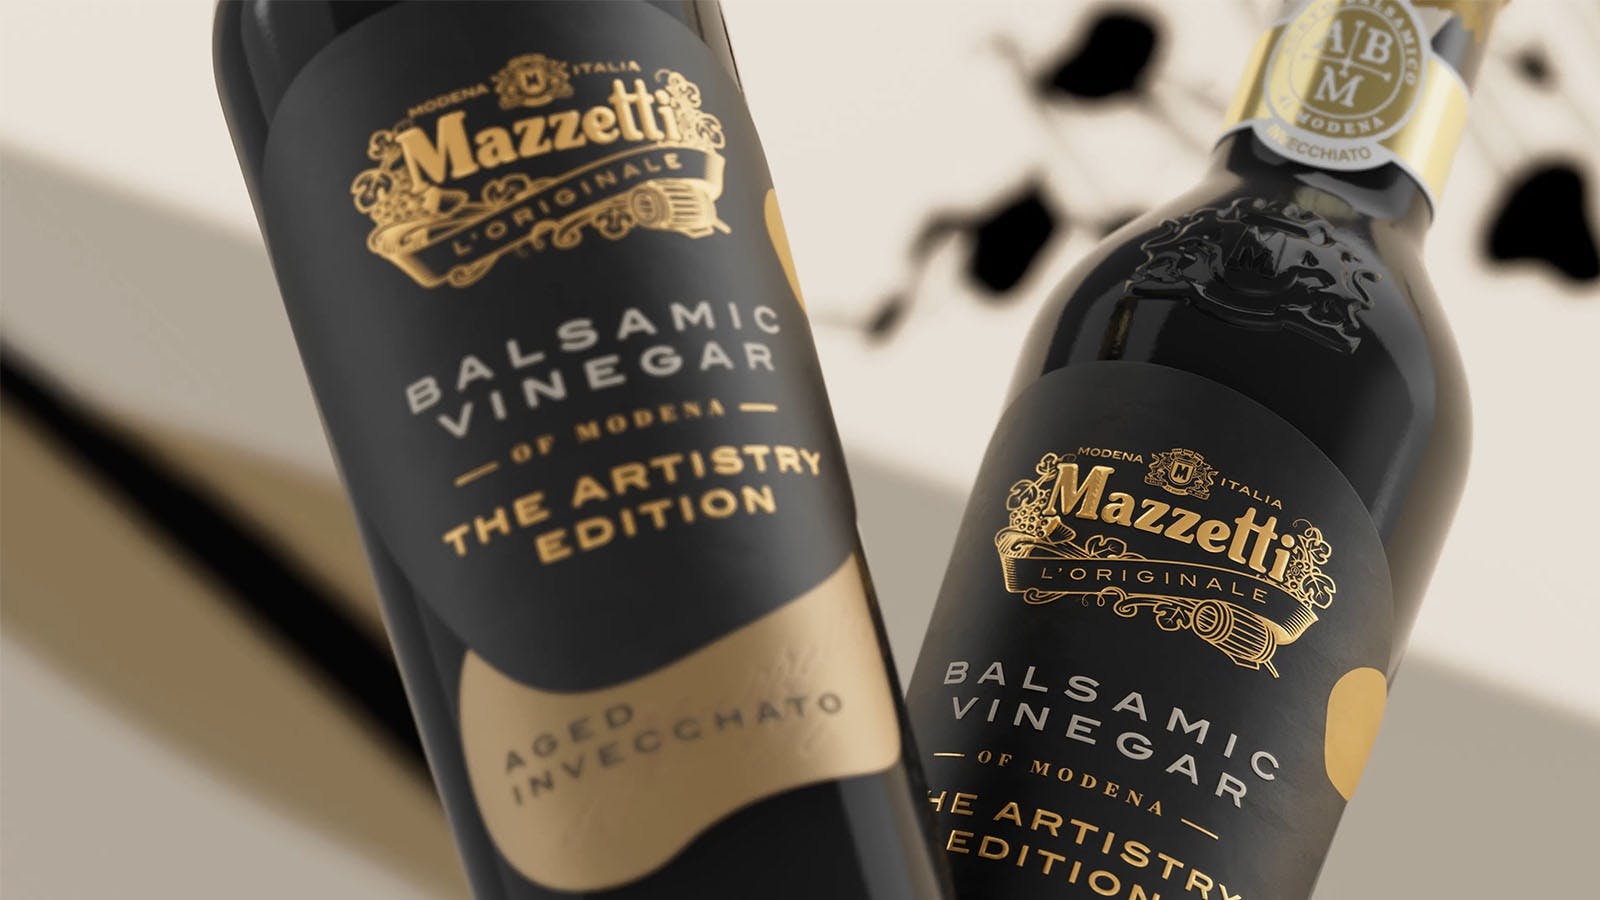 Mazzetti artistry edition bottle closeup